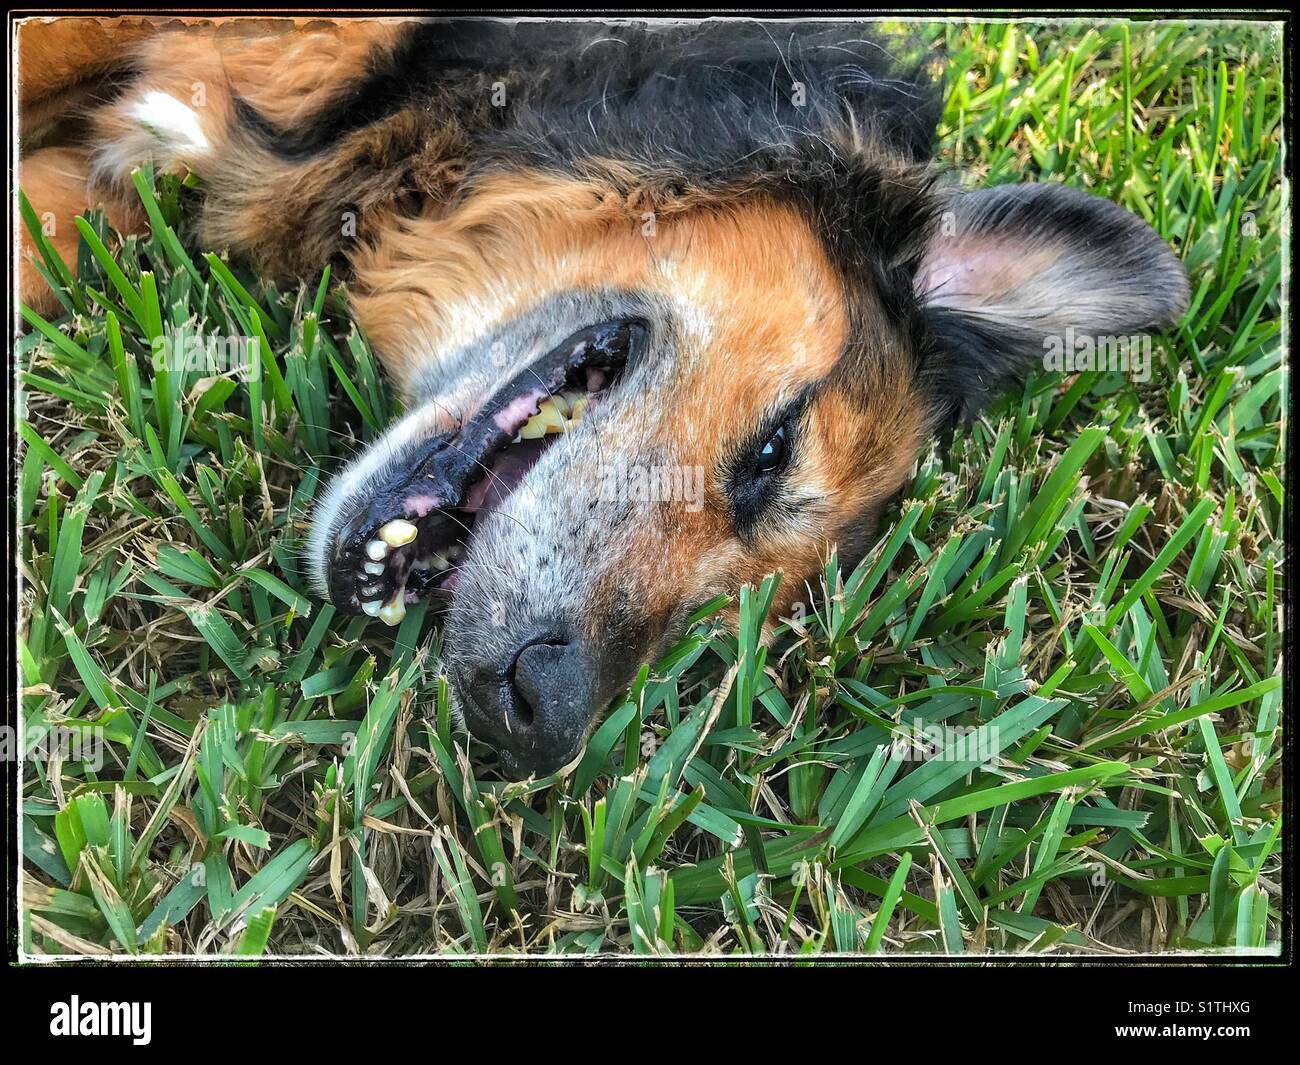 Sorridenti cane rilassante nel lussureggiante verde erba Foto Stock